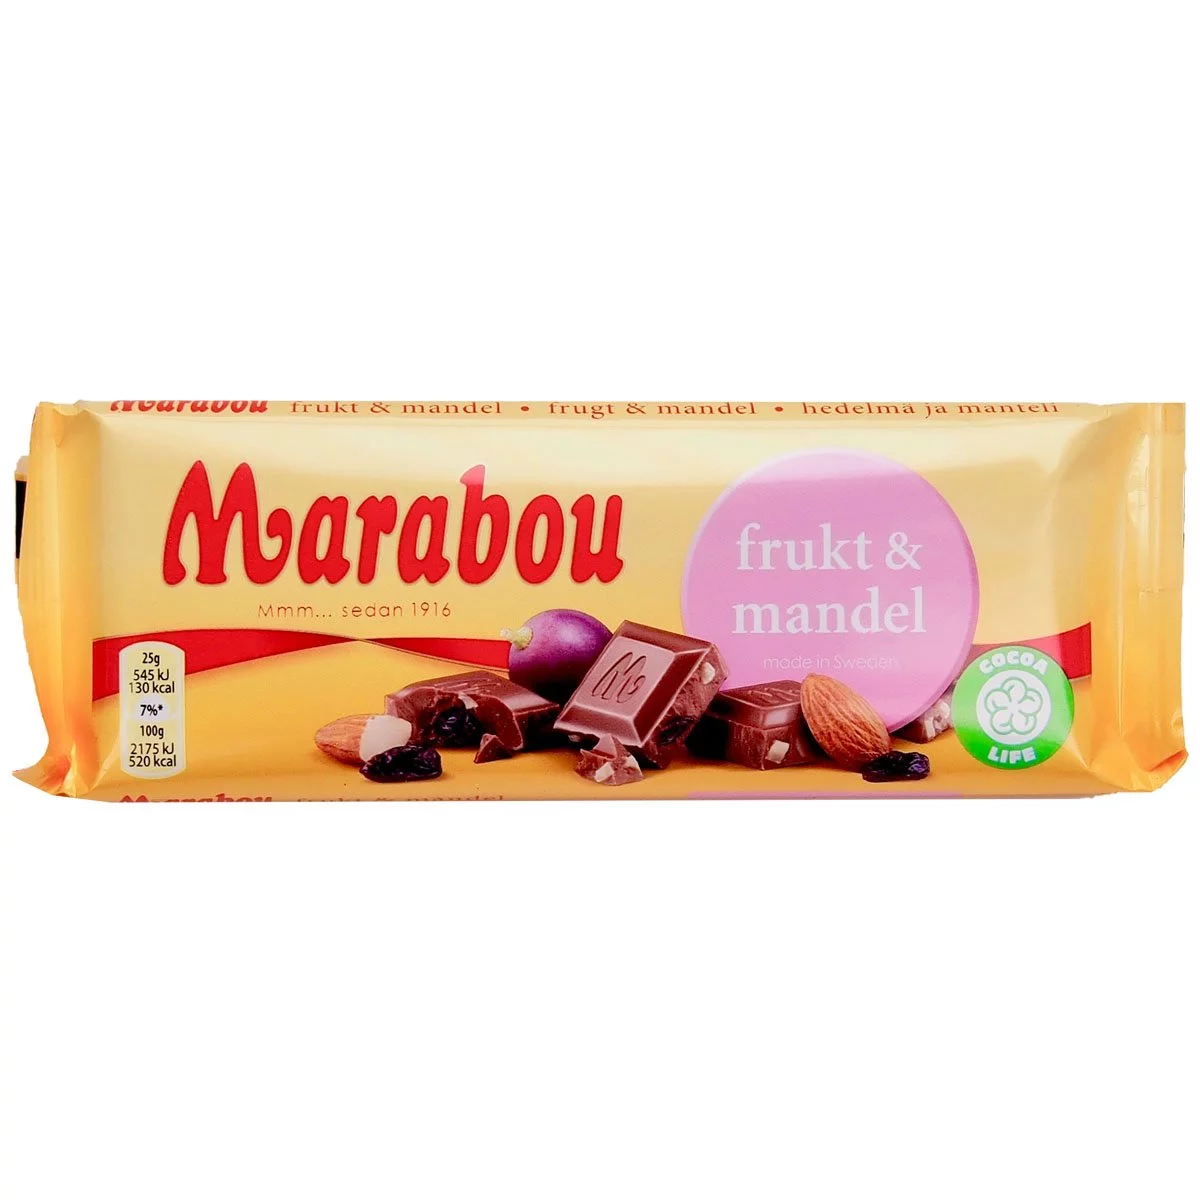 Marabou frukt & mandel (100g) *SONDERPREIS wegen kurzer Haltbarkeit* 1